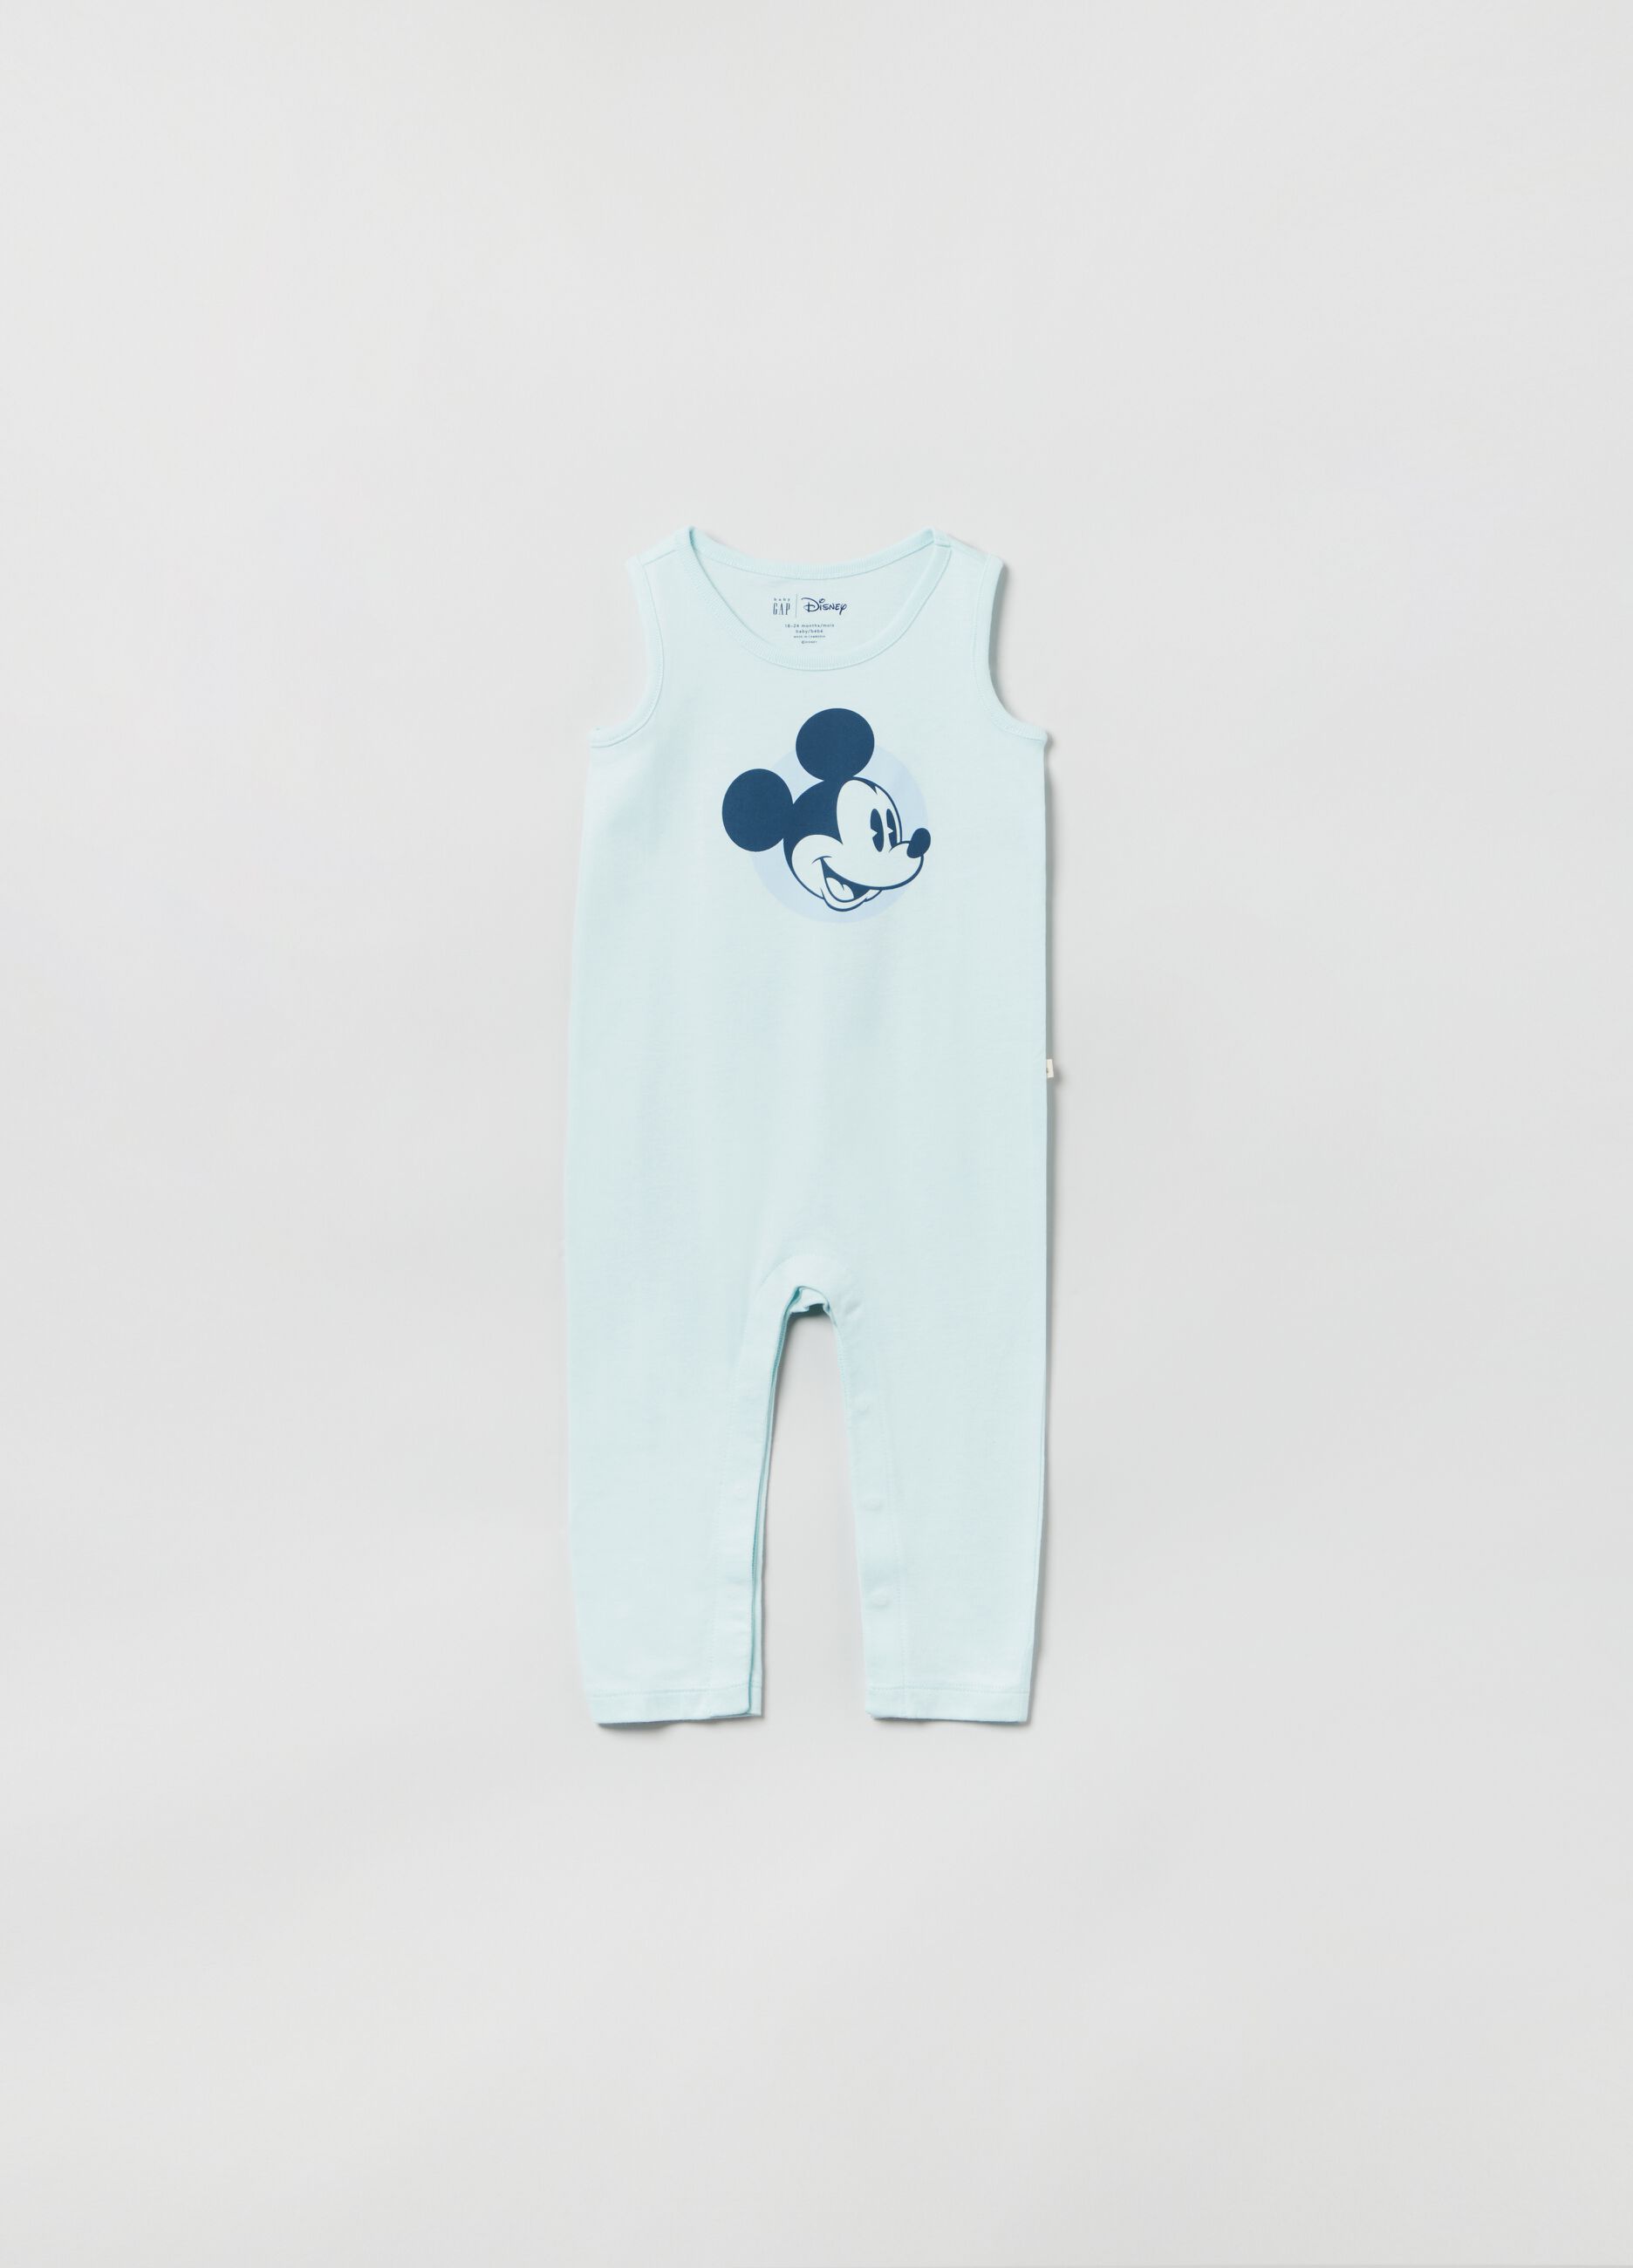 Sleeveless onesie with Disney Mickey Mouse print.